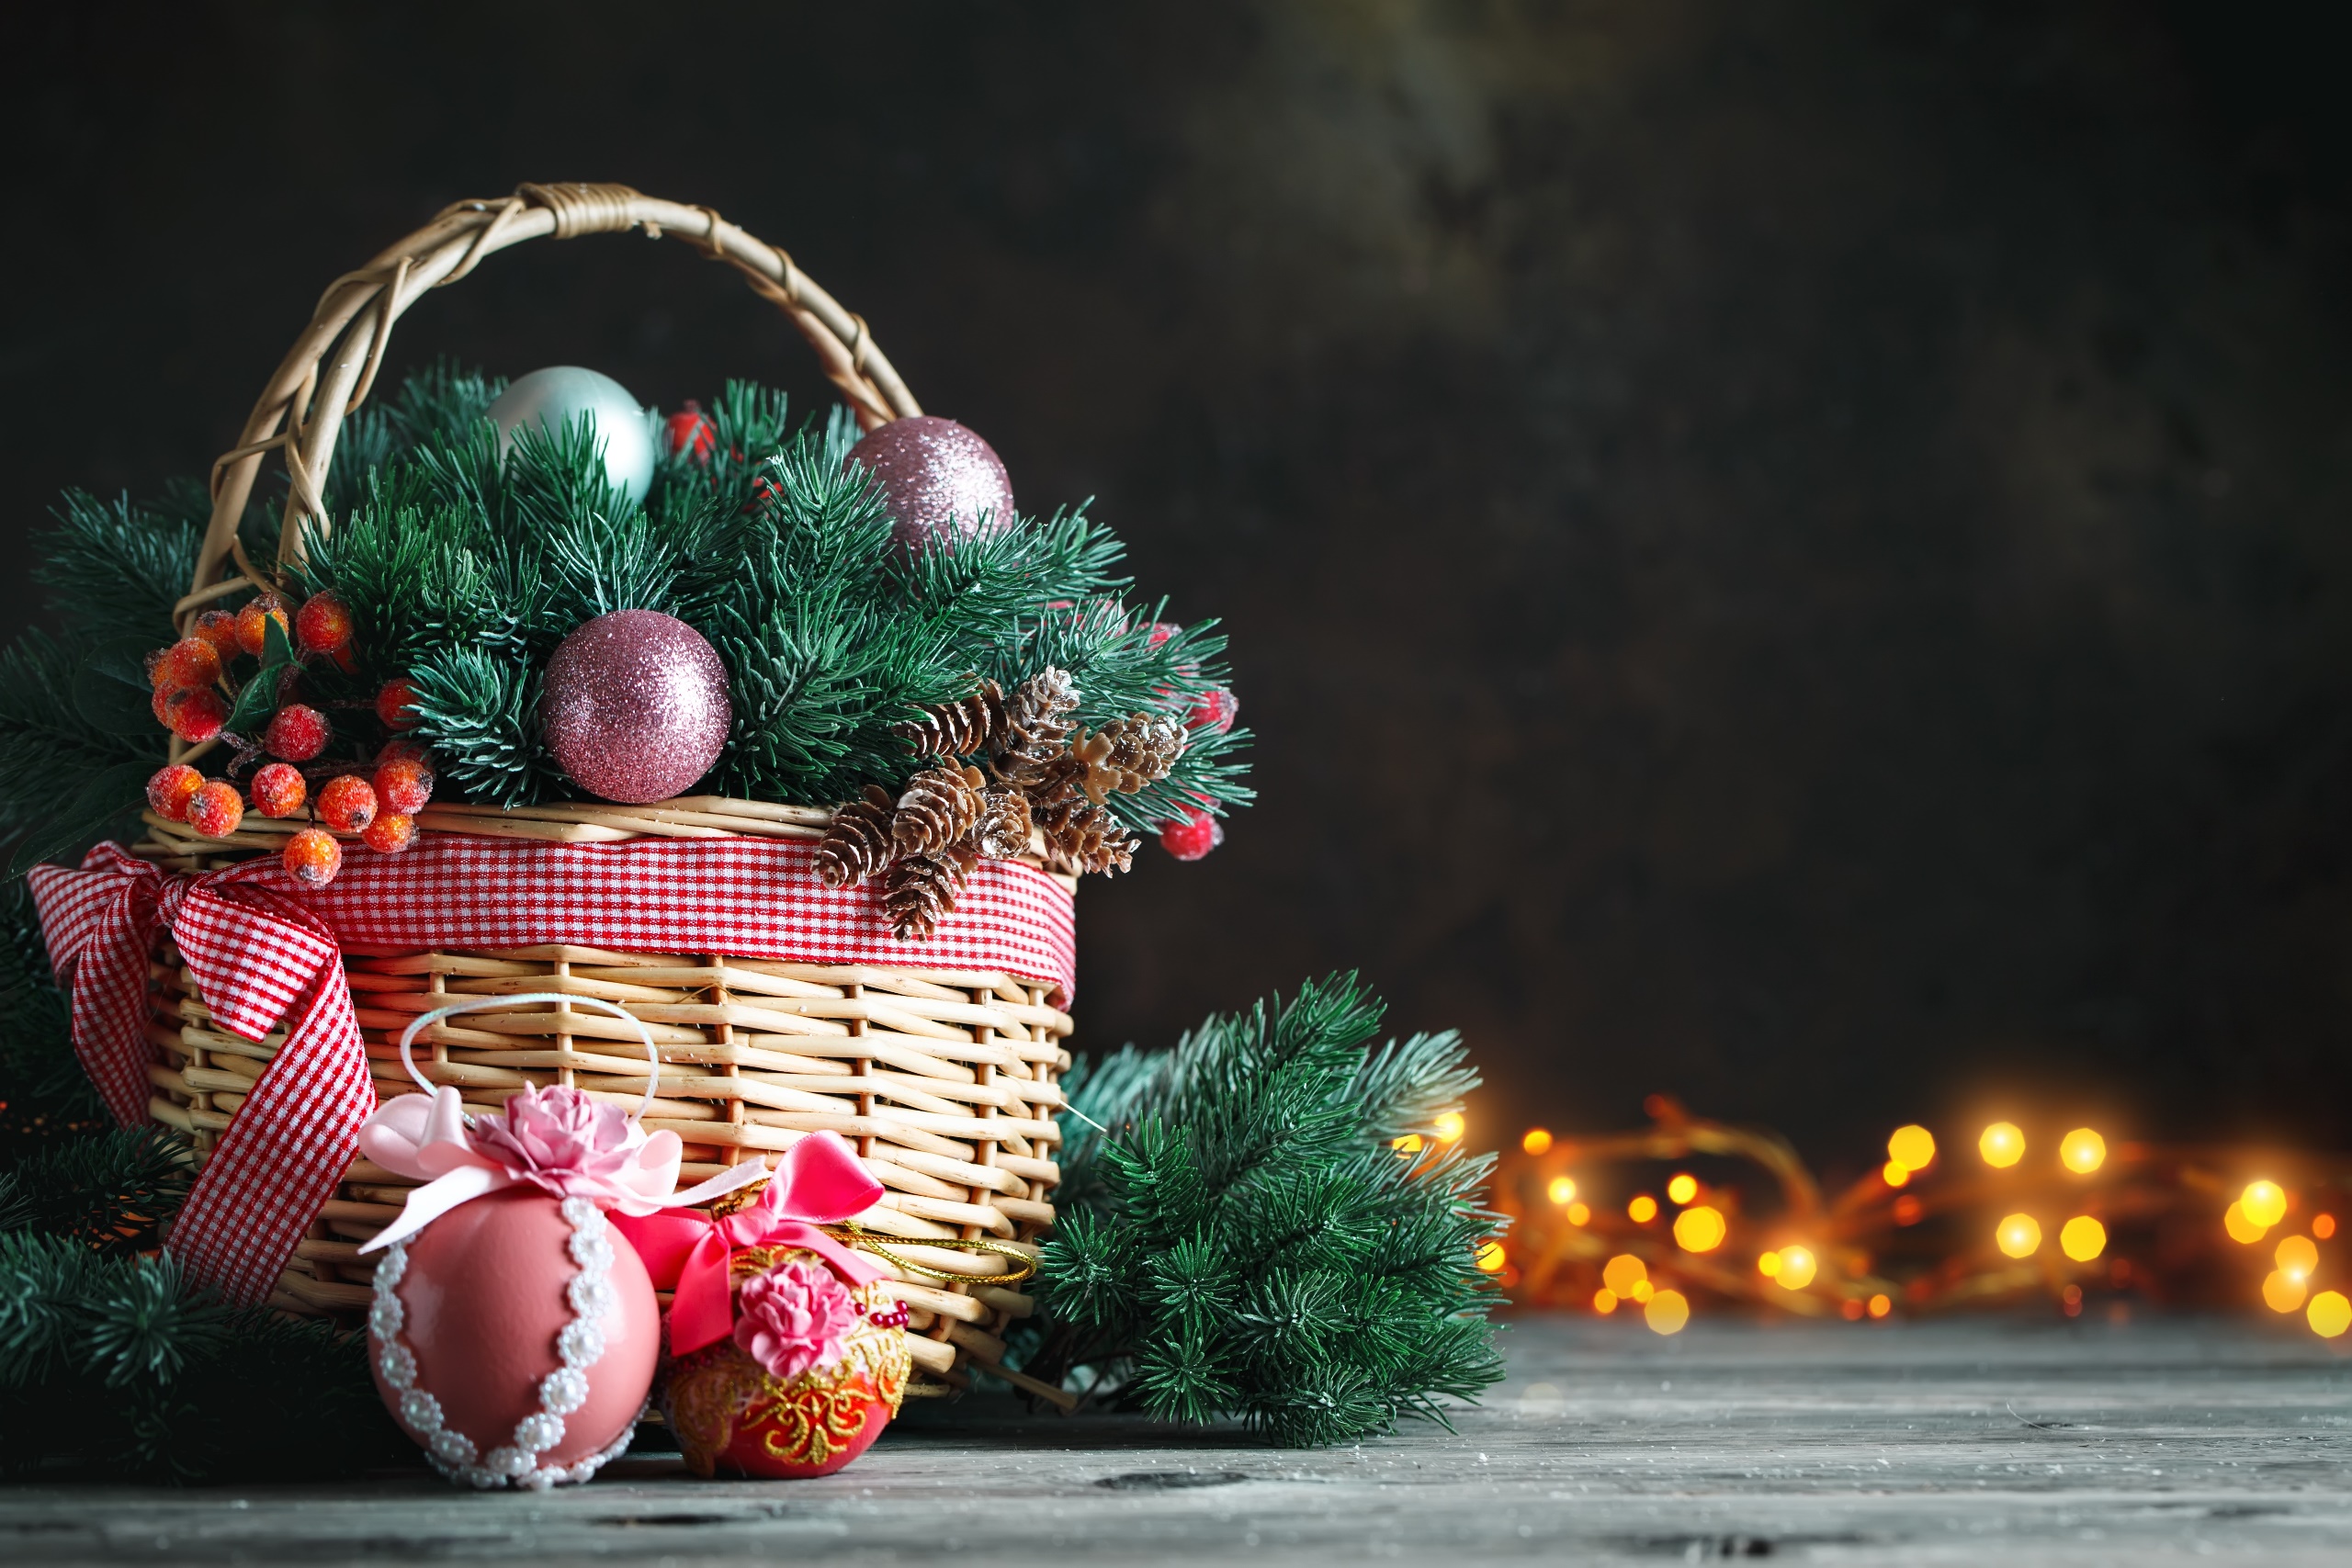 General 2560x1707 Christmas Christmas ornaments  baskets